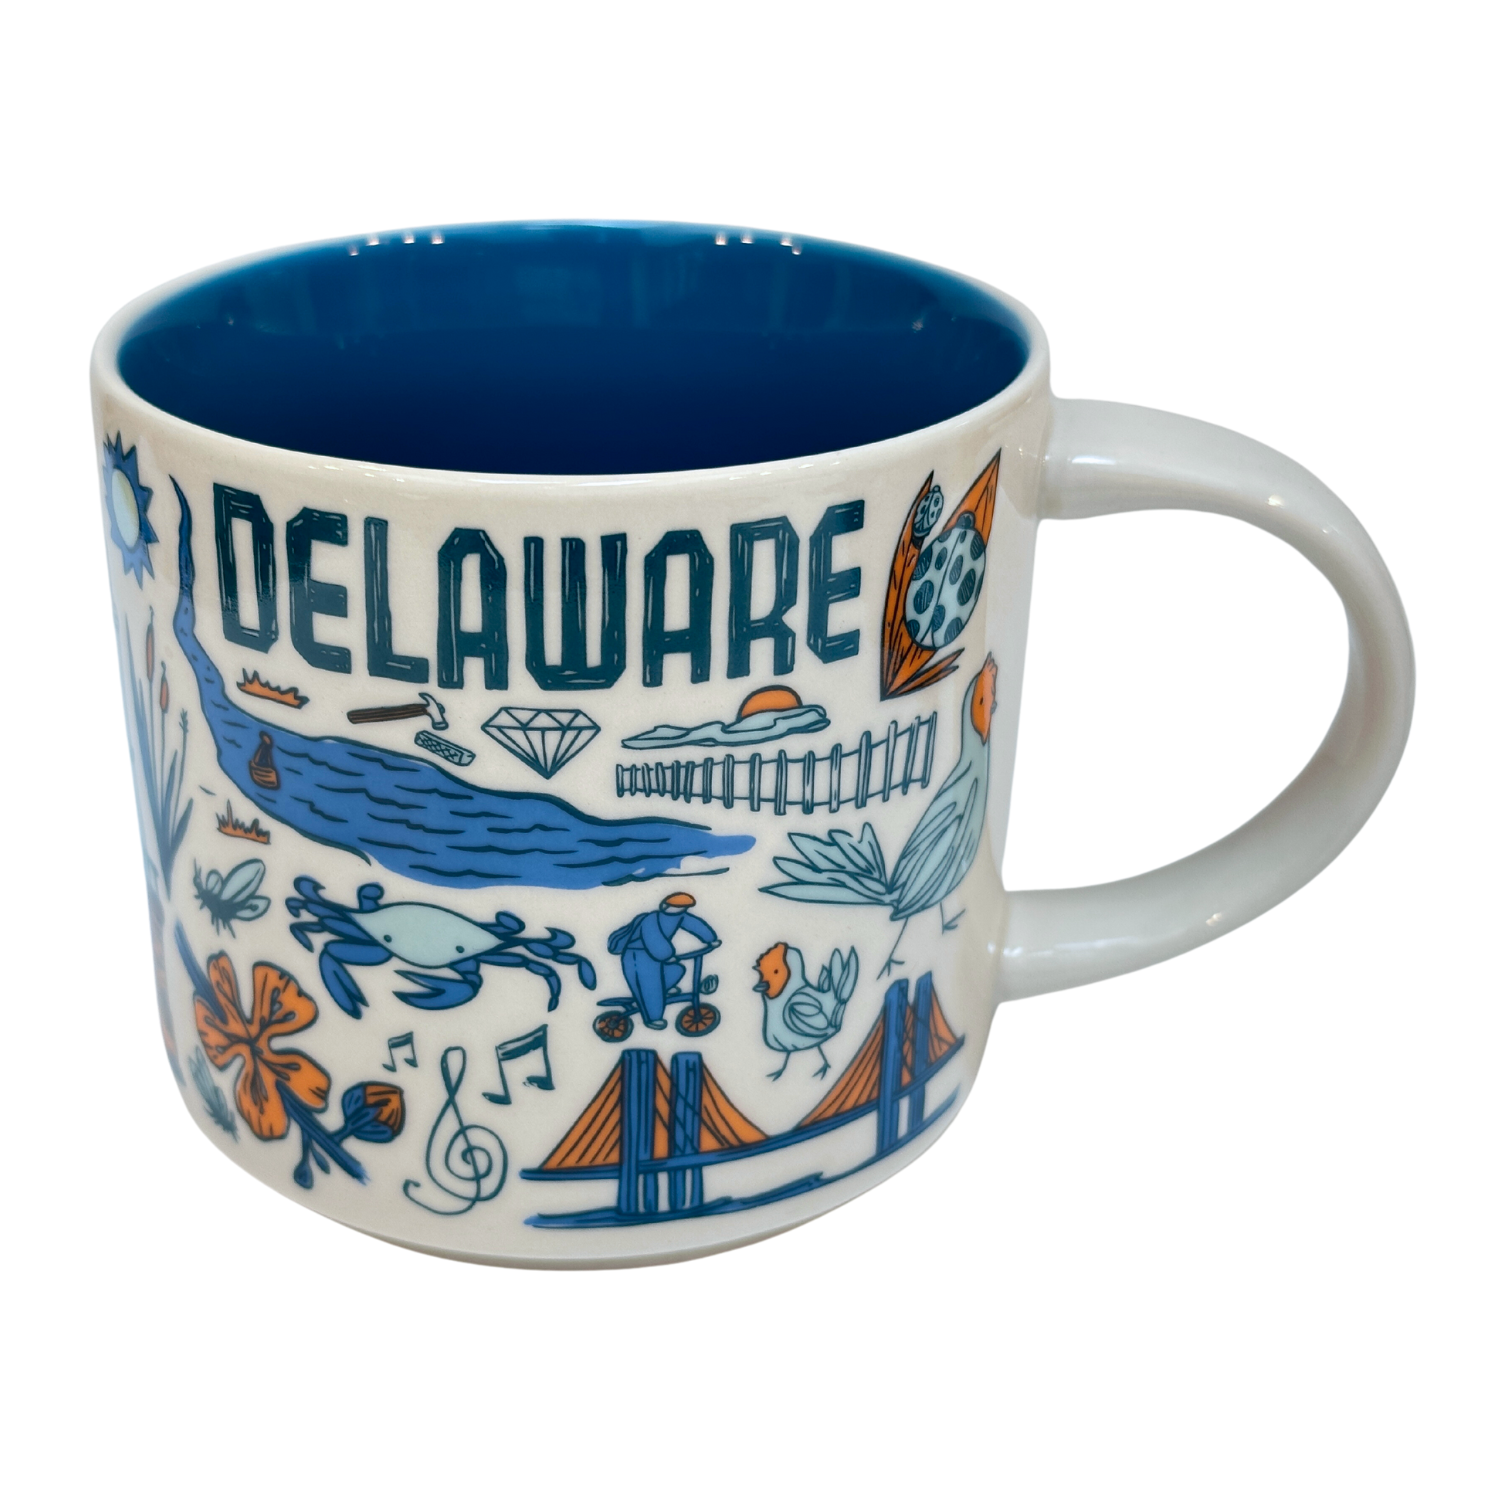 Starbucks Been There Series Delaware Ceramic Coffee Mug, 14 Oz